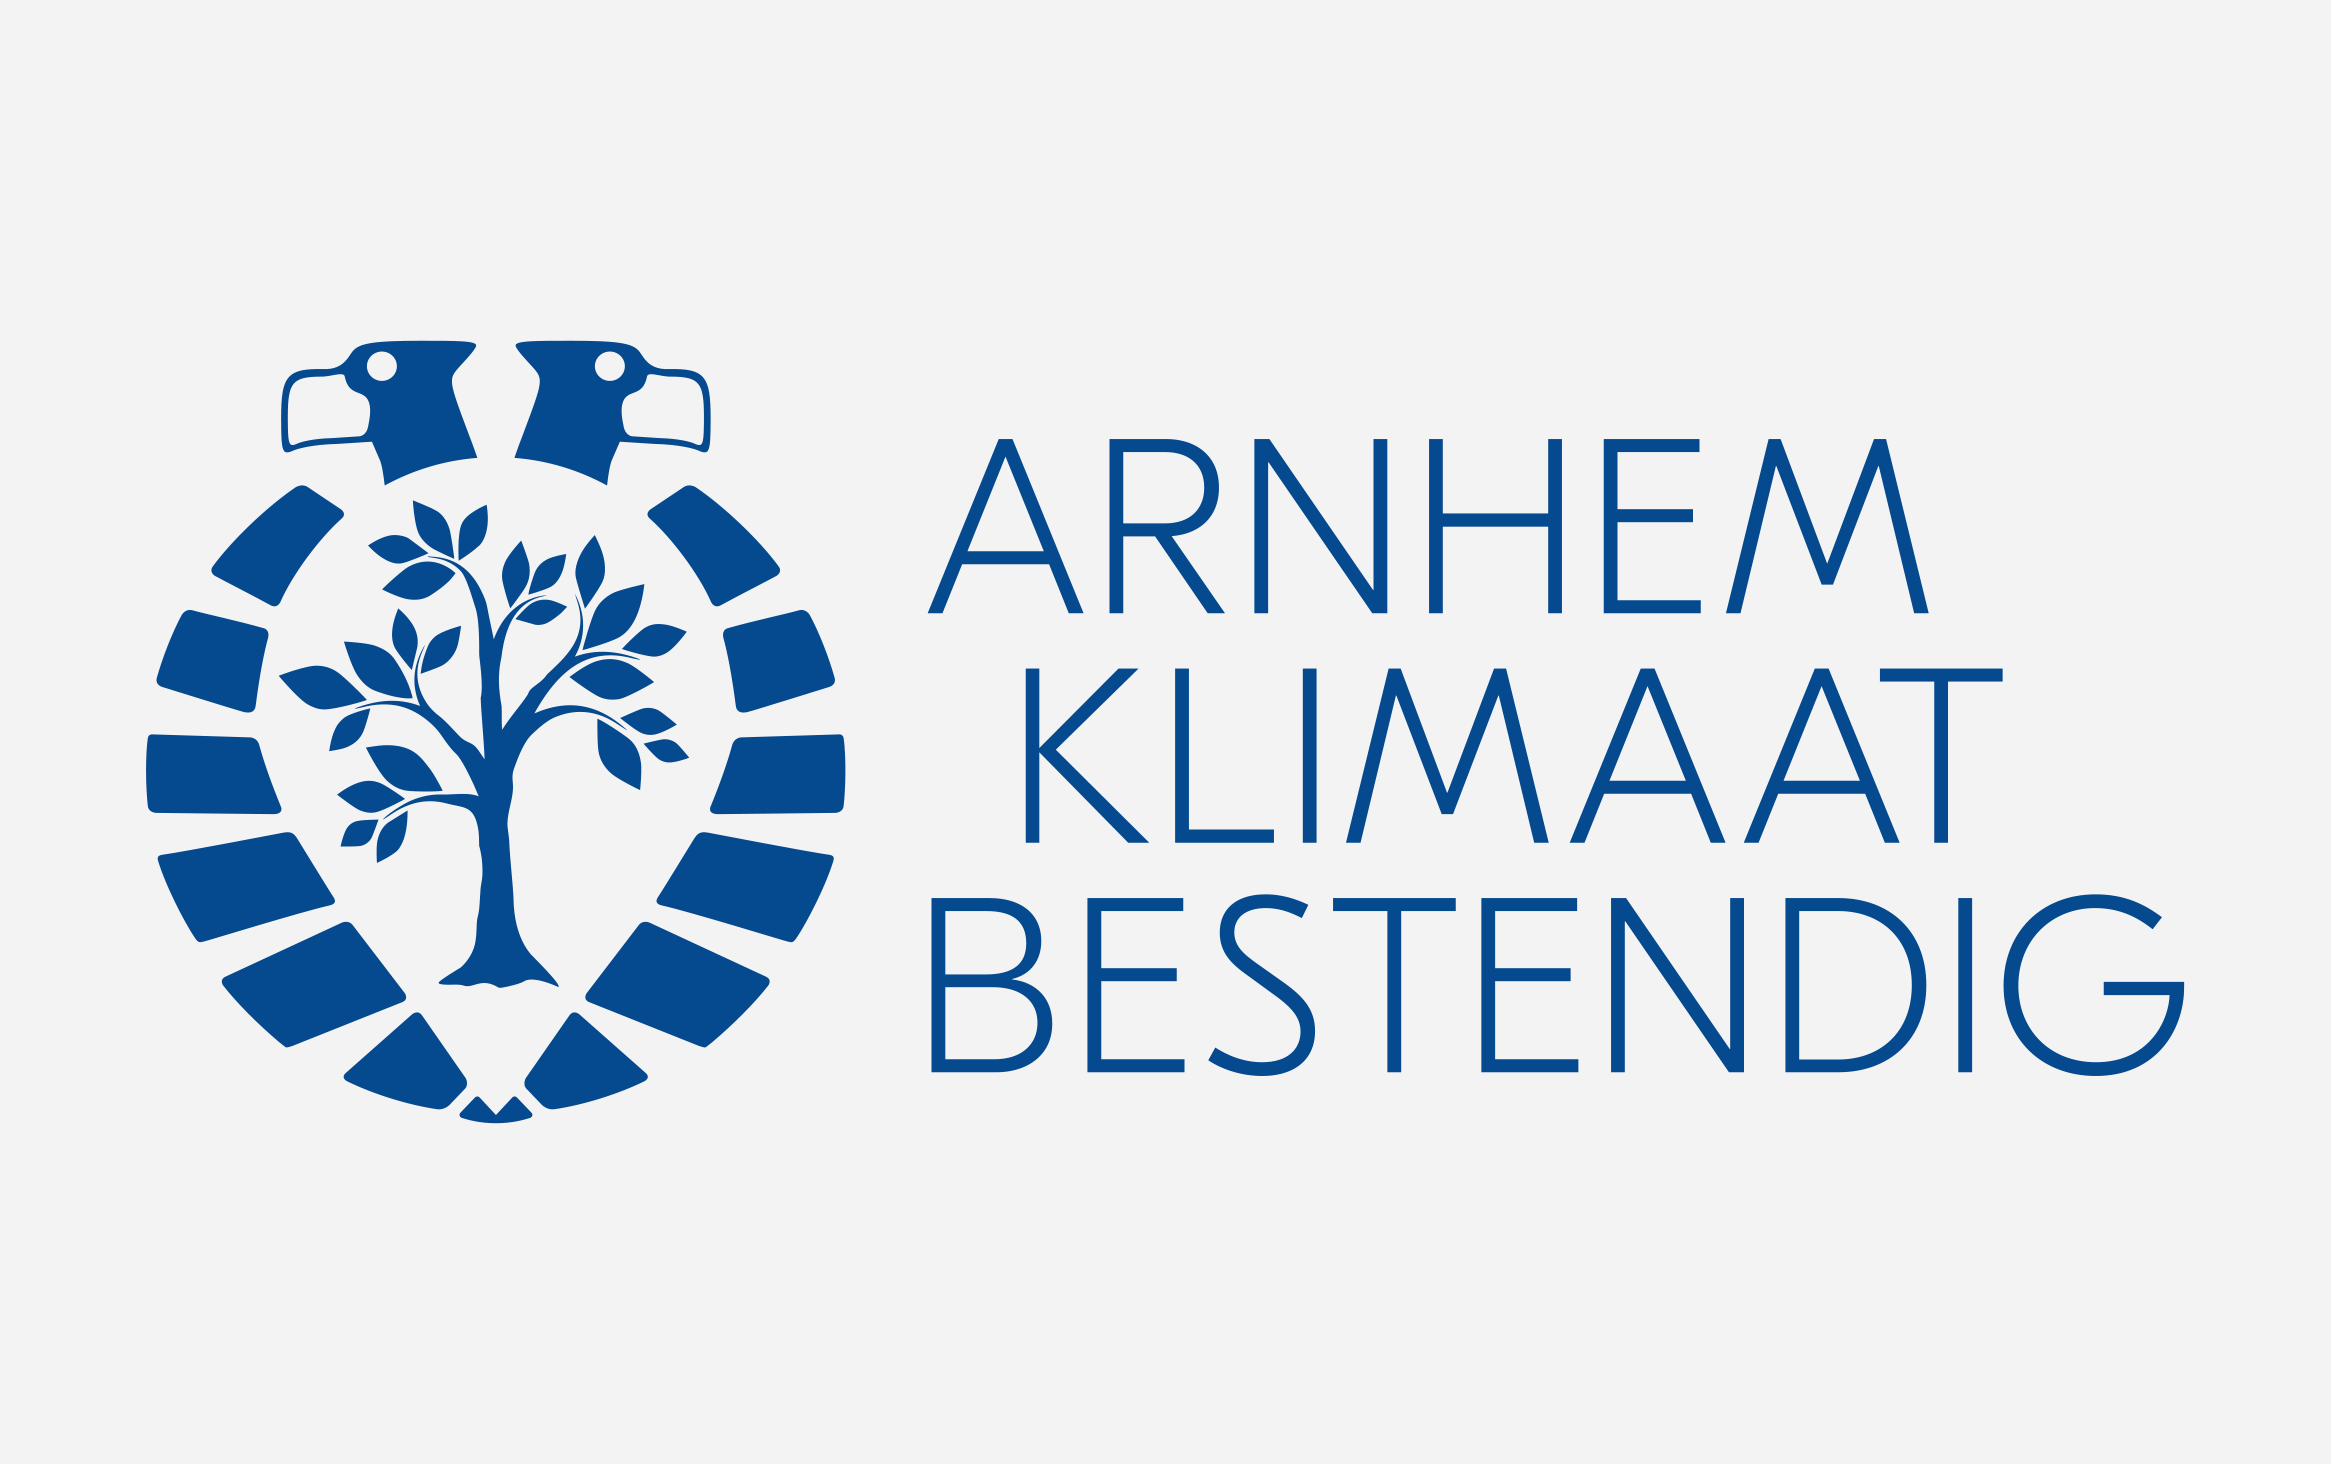 Arnhem Klimaatbestendig gemeente arnhem klimaat grafisch ontwerp dana dijkgraaf DDD logo